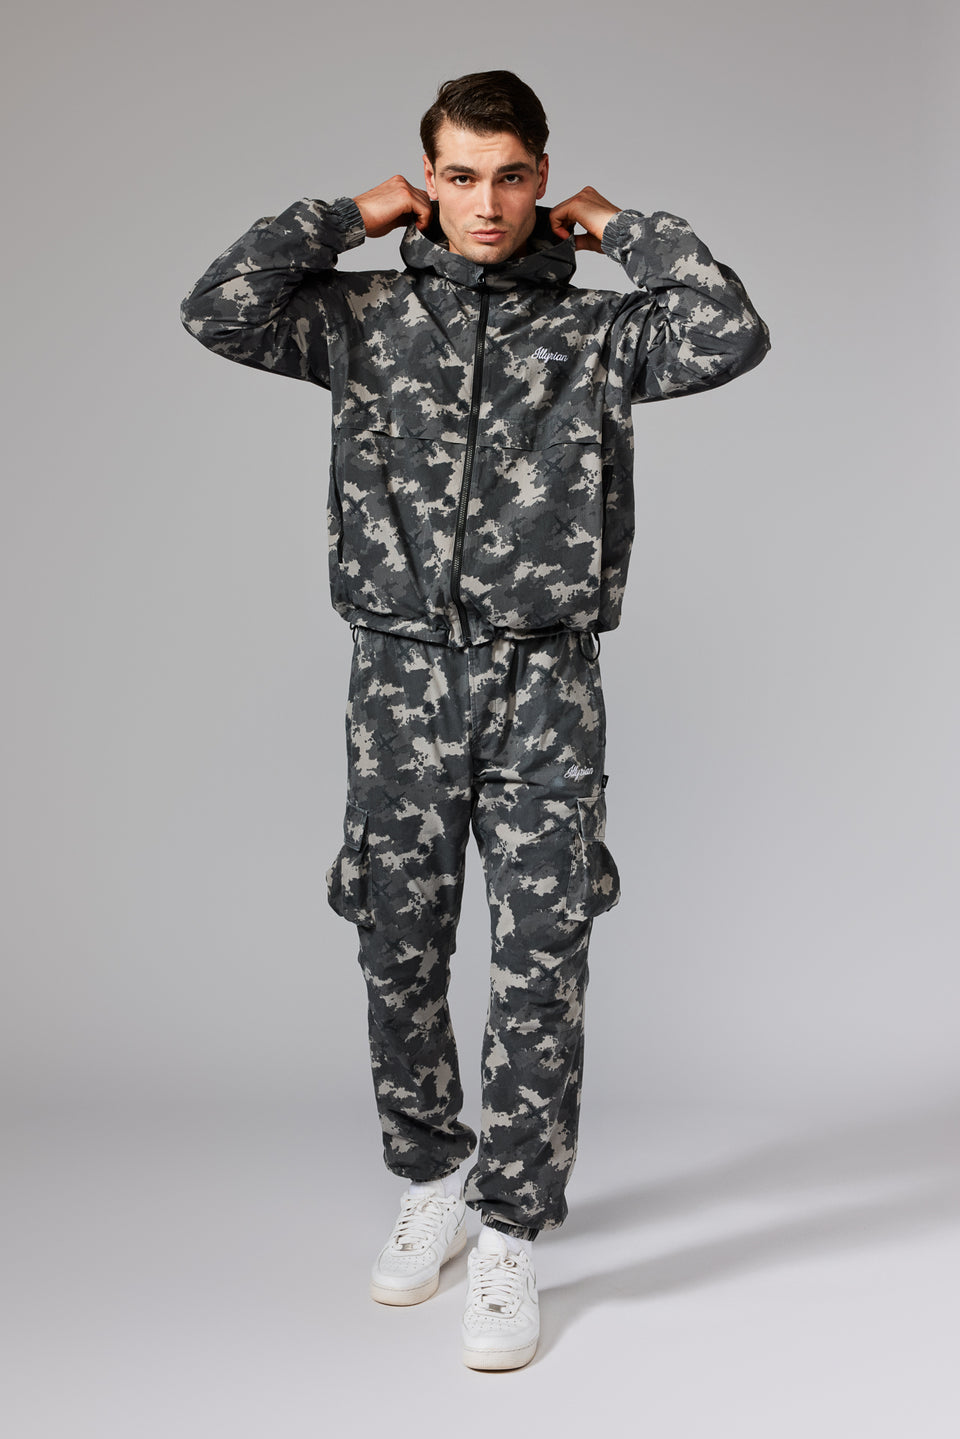 Premium Illyrian Jacket - Camouflage